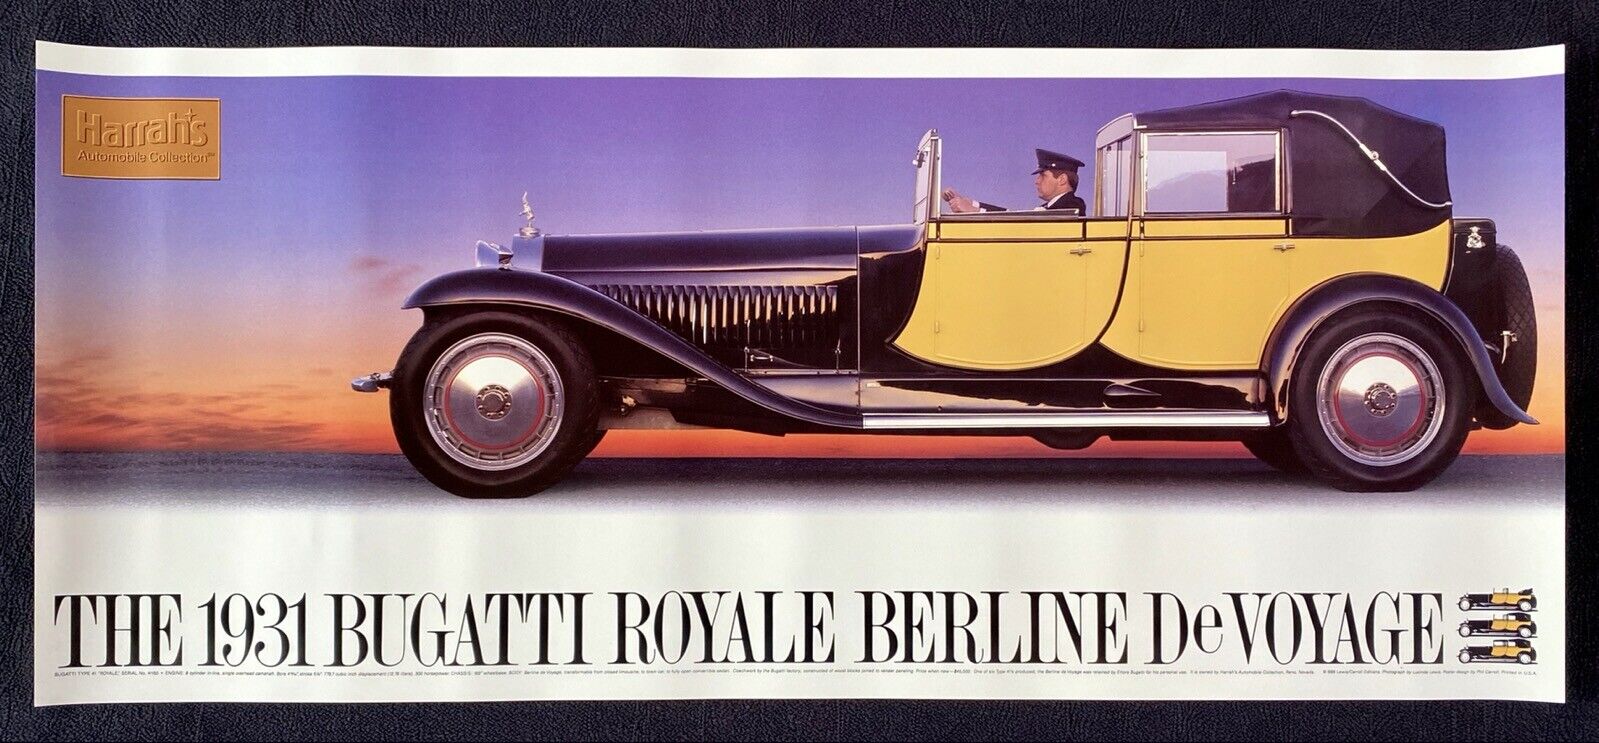 1931 Bugatti Royale Berline de Voyage Harrah's Large Poster Briggs Cunningham